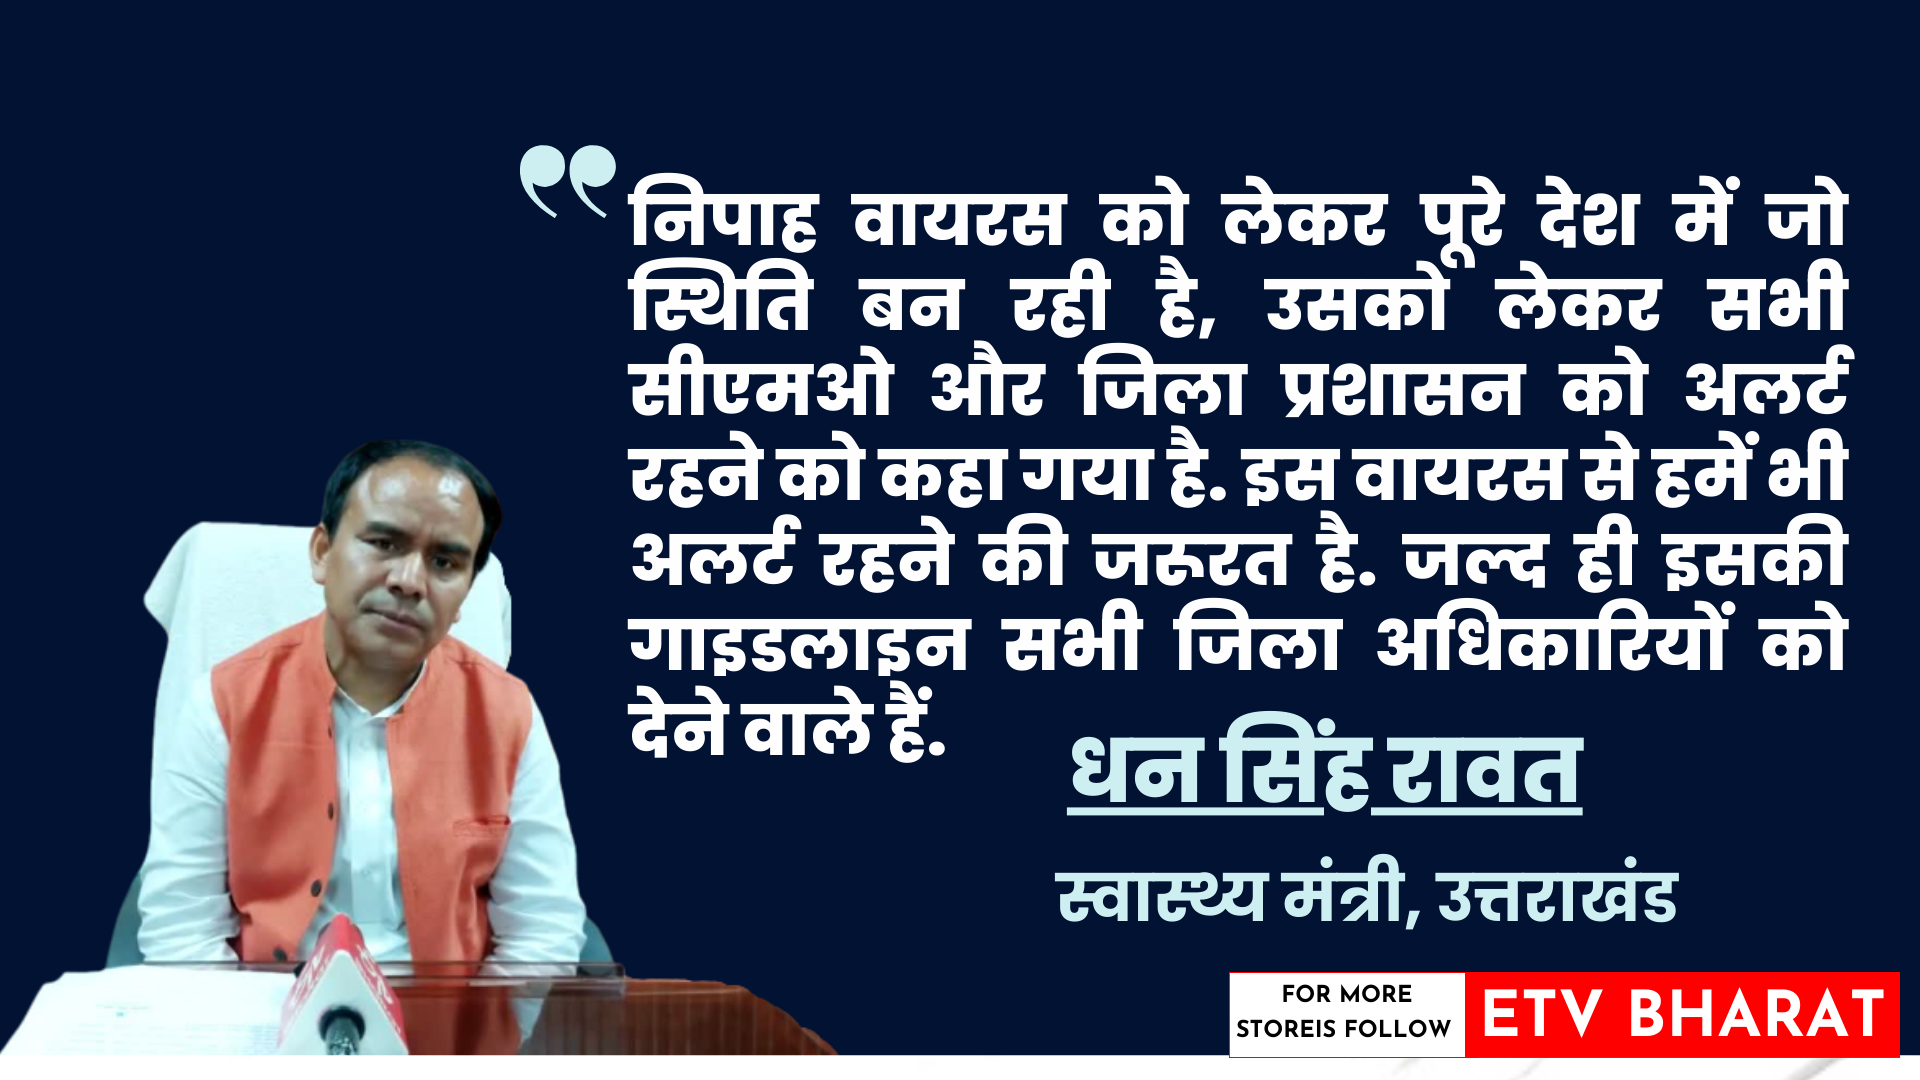 Uttarakhand Health Minister Dhan Singh Rawat